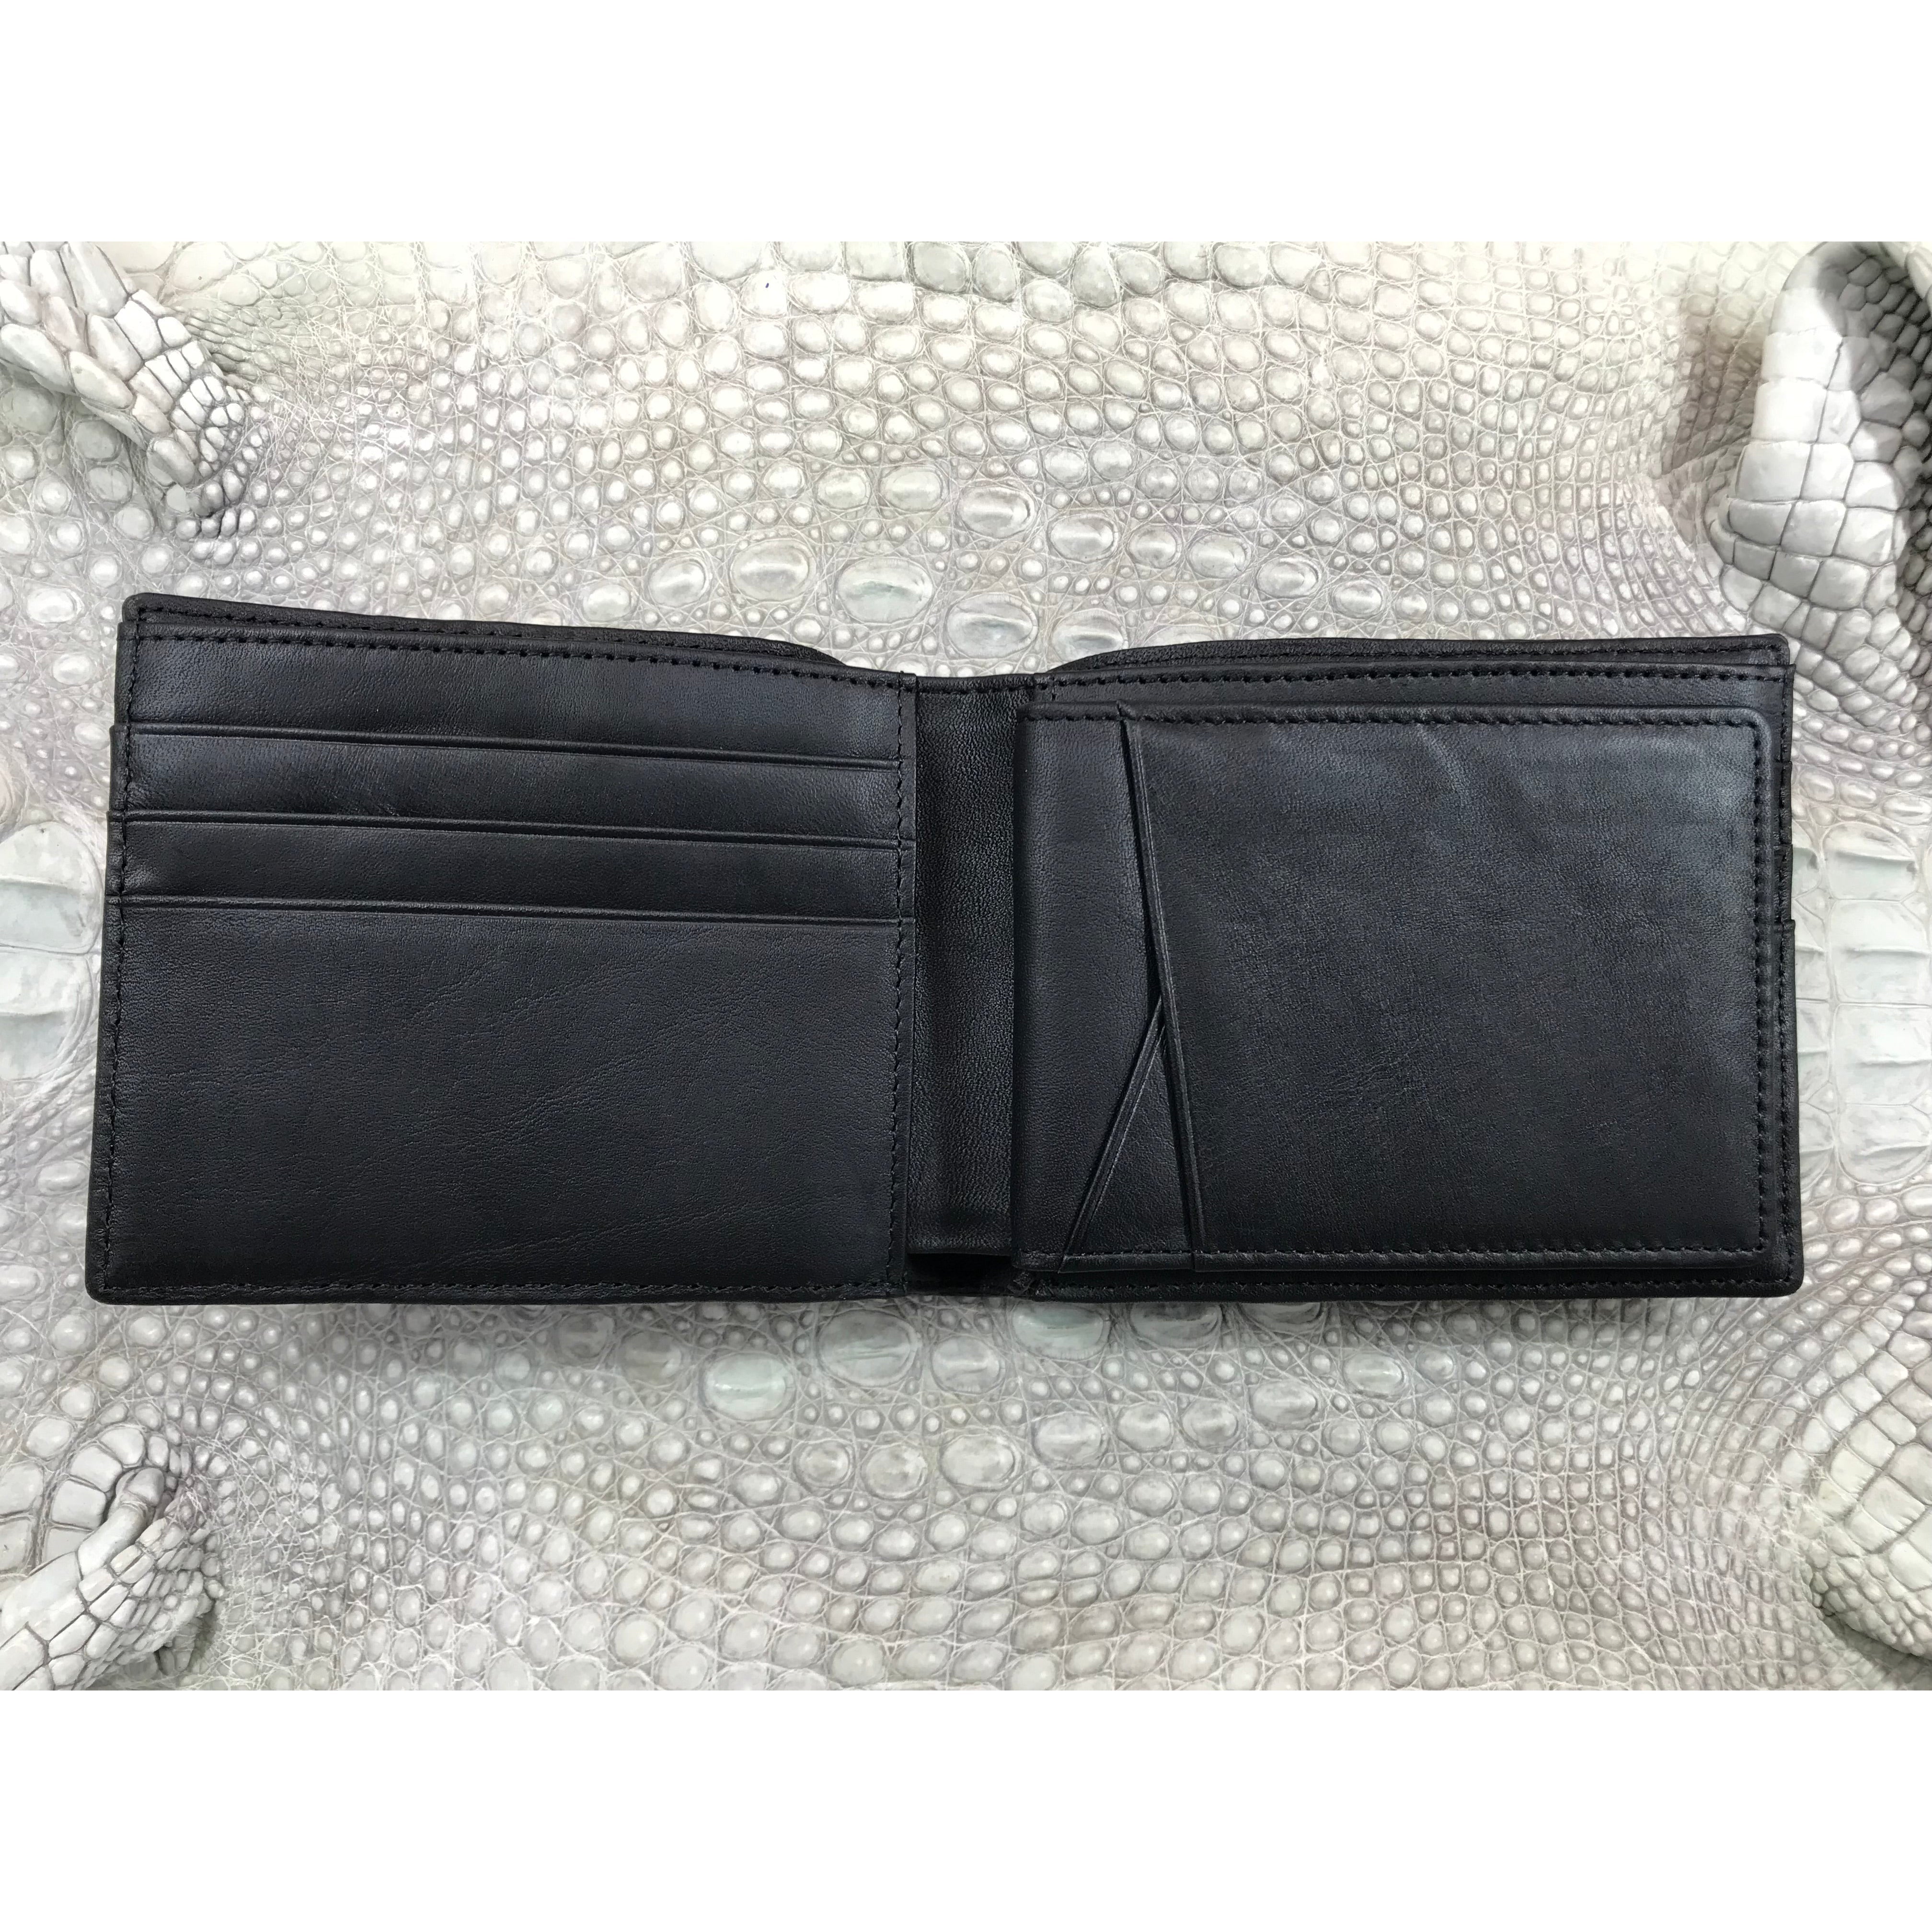 Black Alligator Skin Bifold Wallet For Men | Handmade Crocodile Leather Wallet RFID Blocking | VL5700 - Vinacreations